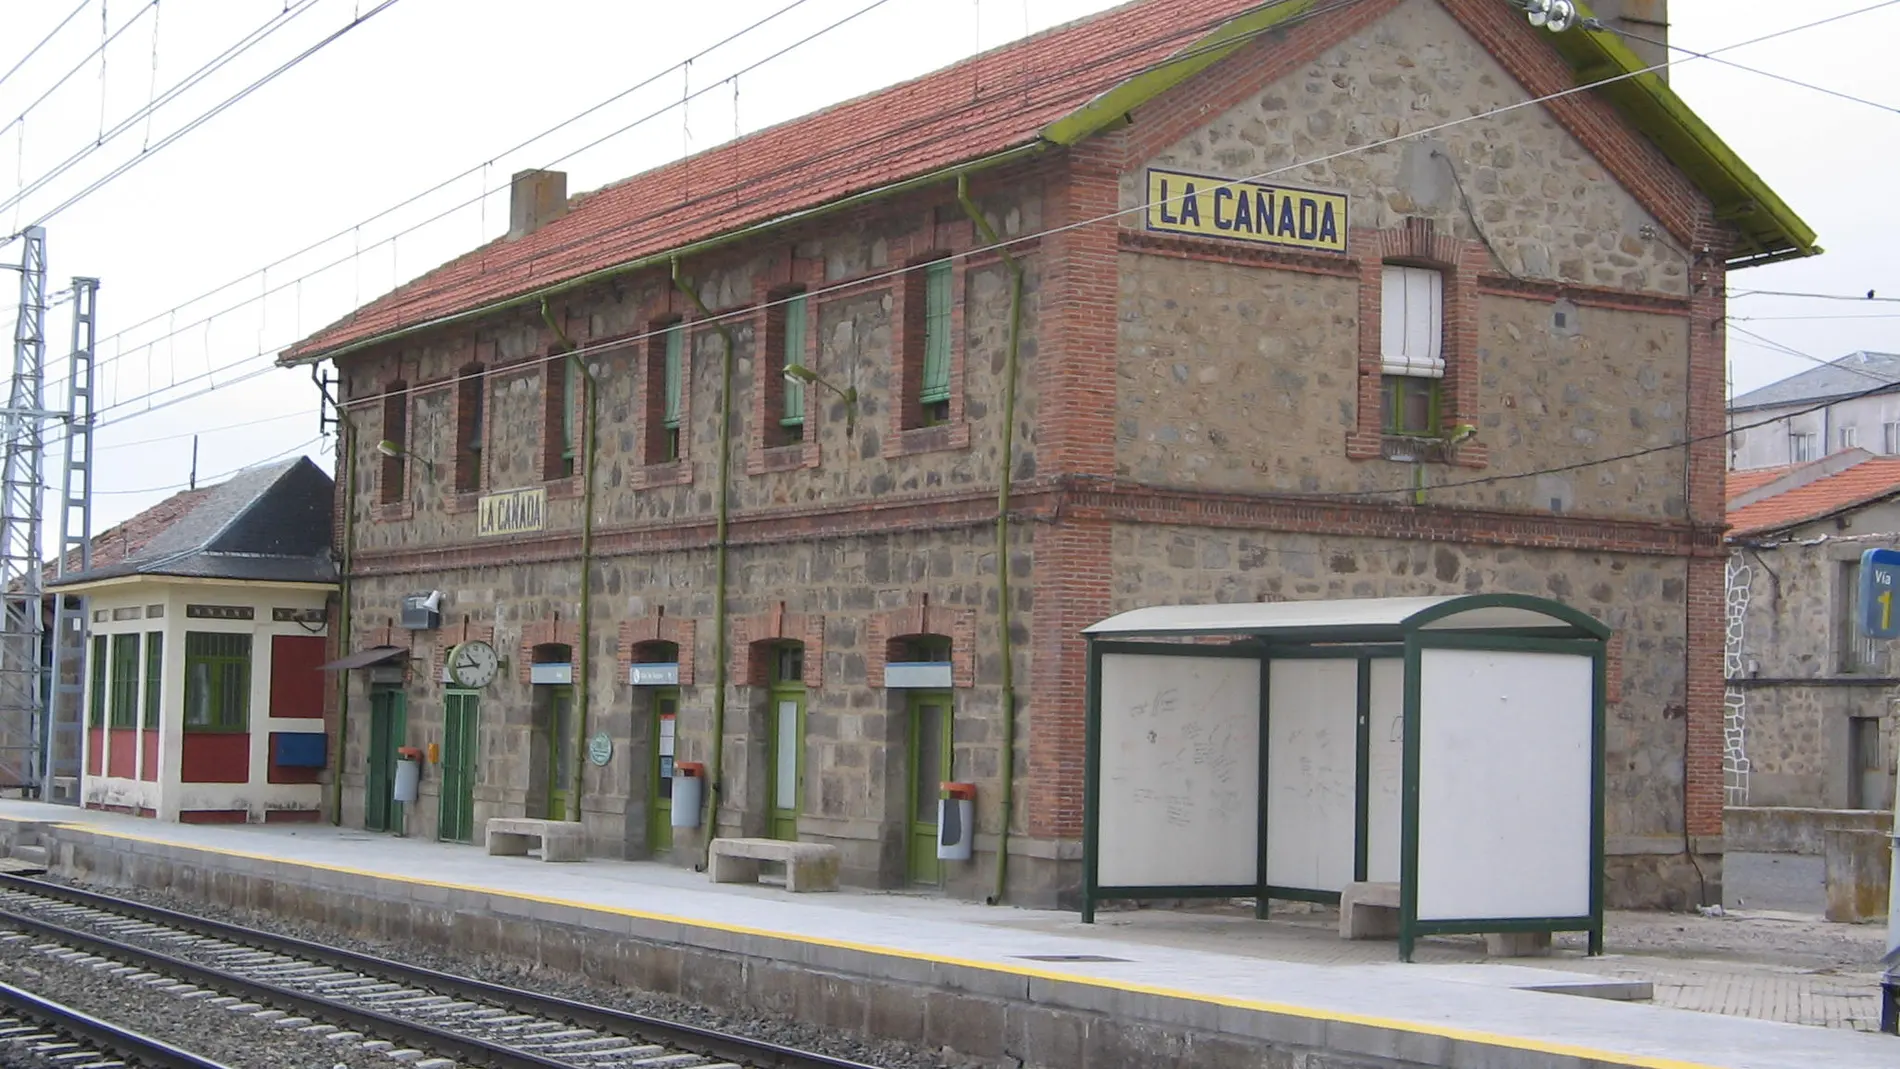 Estación abulense de "La Cañada"